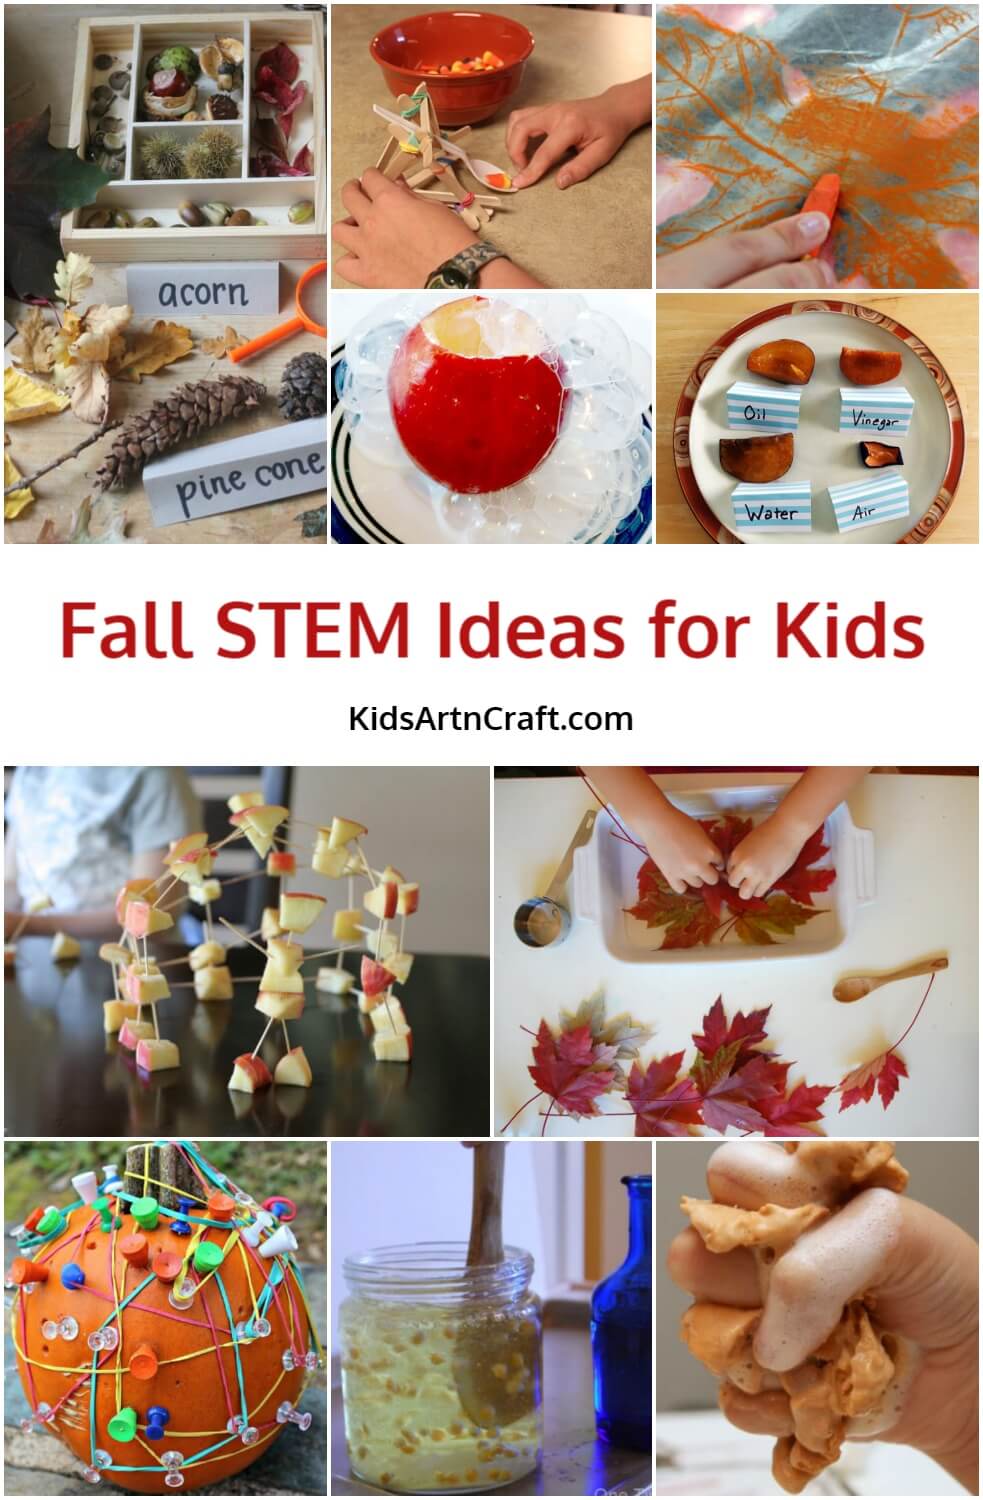 Fall STEM Ideas for Kids